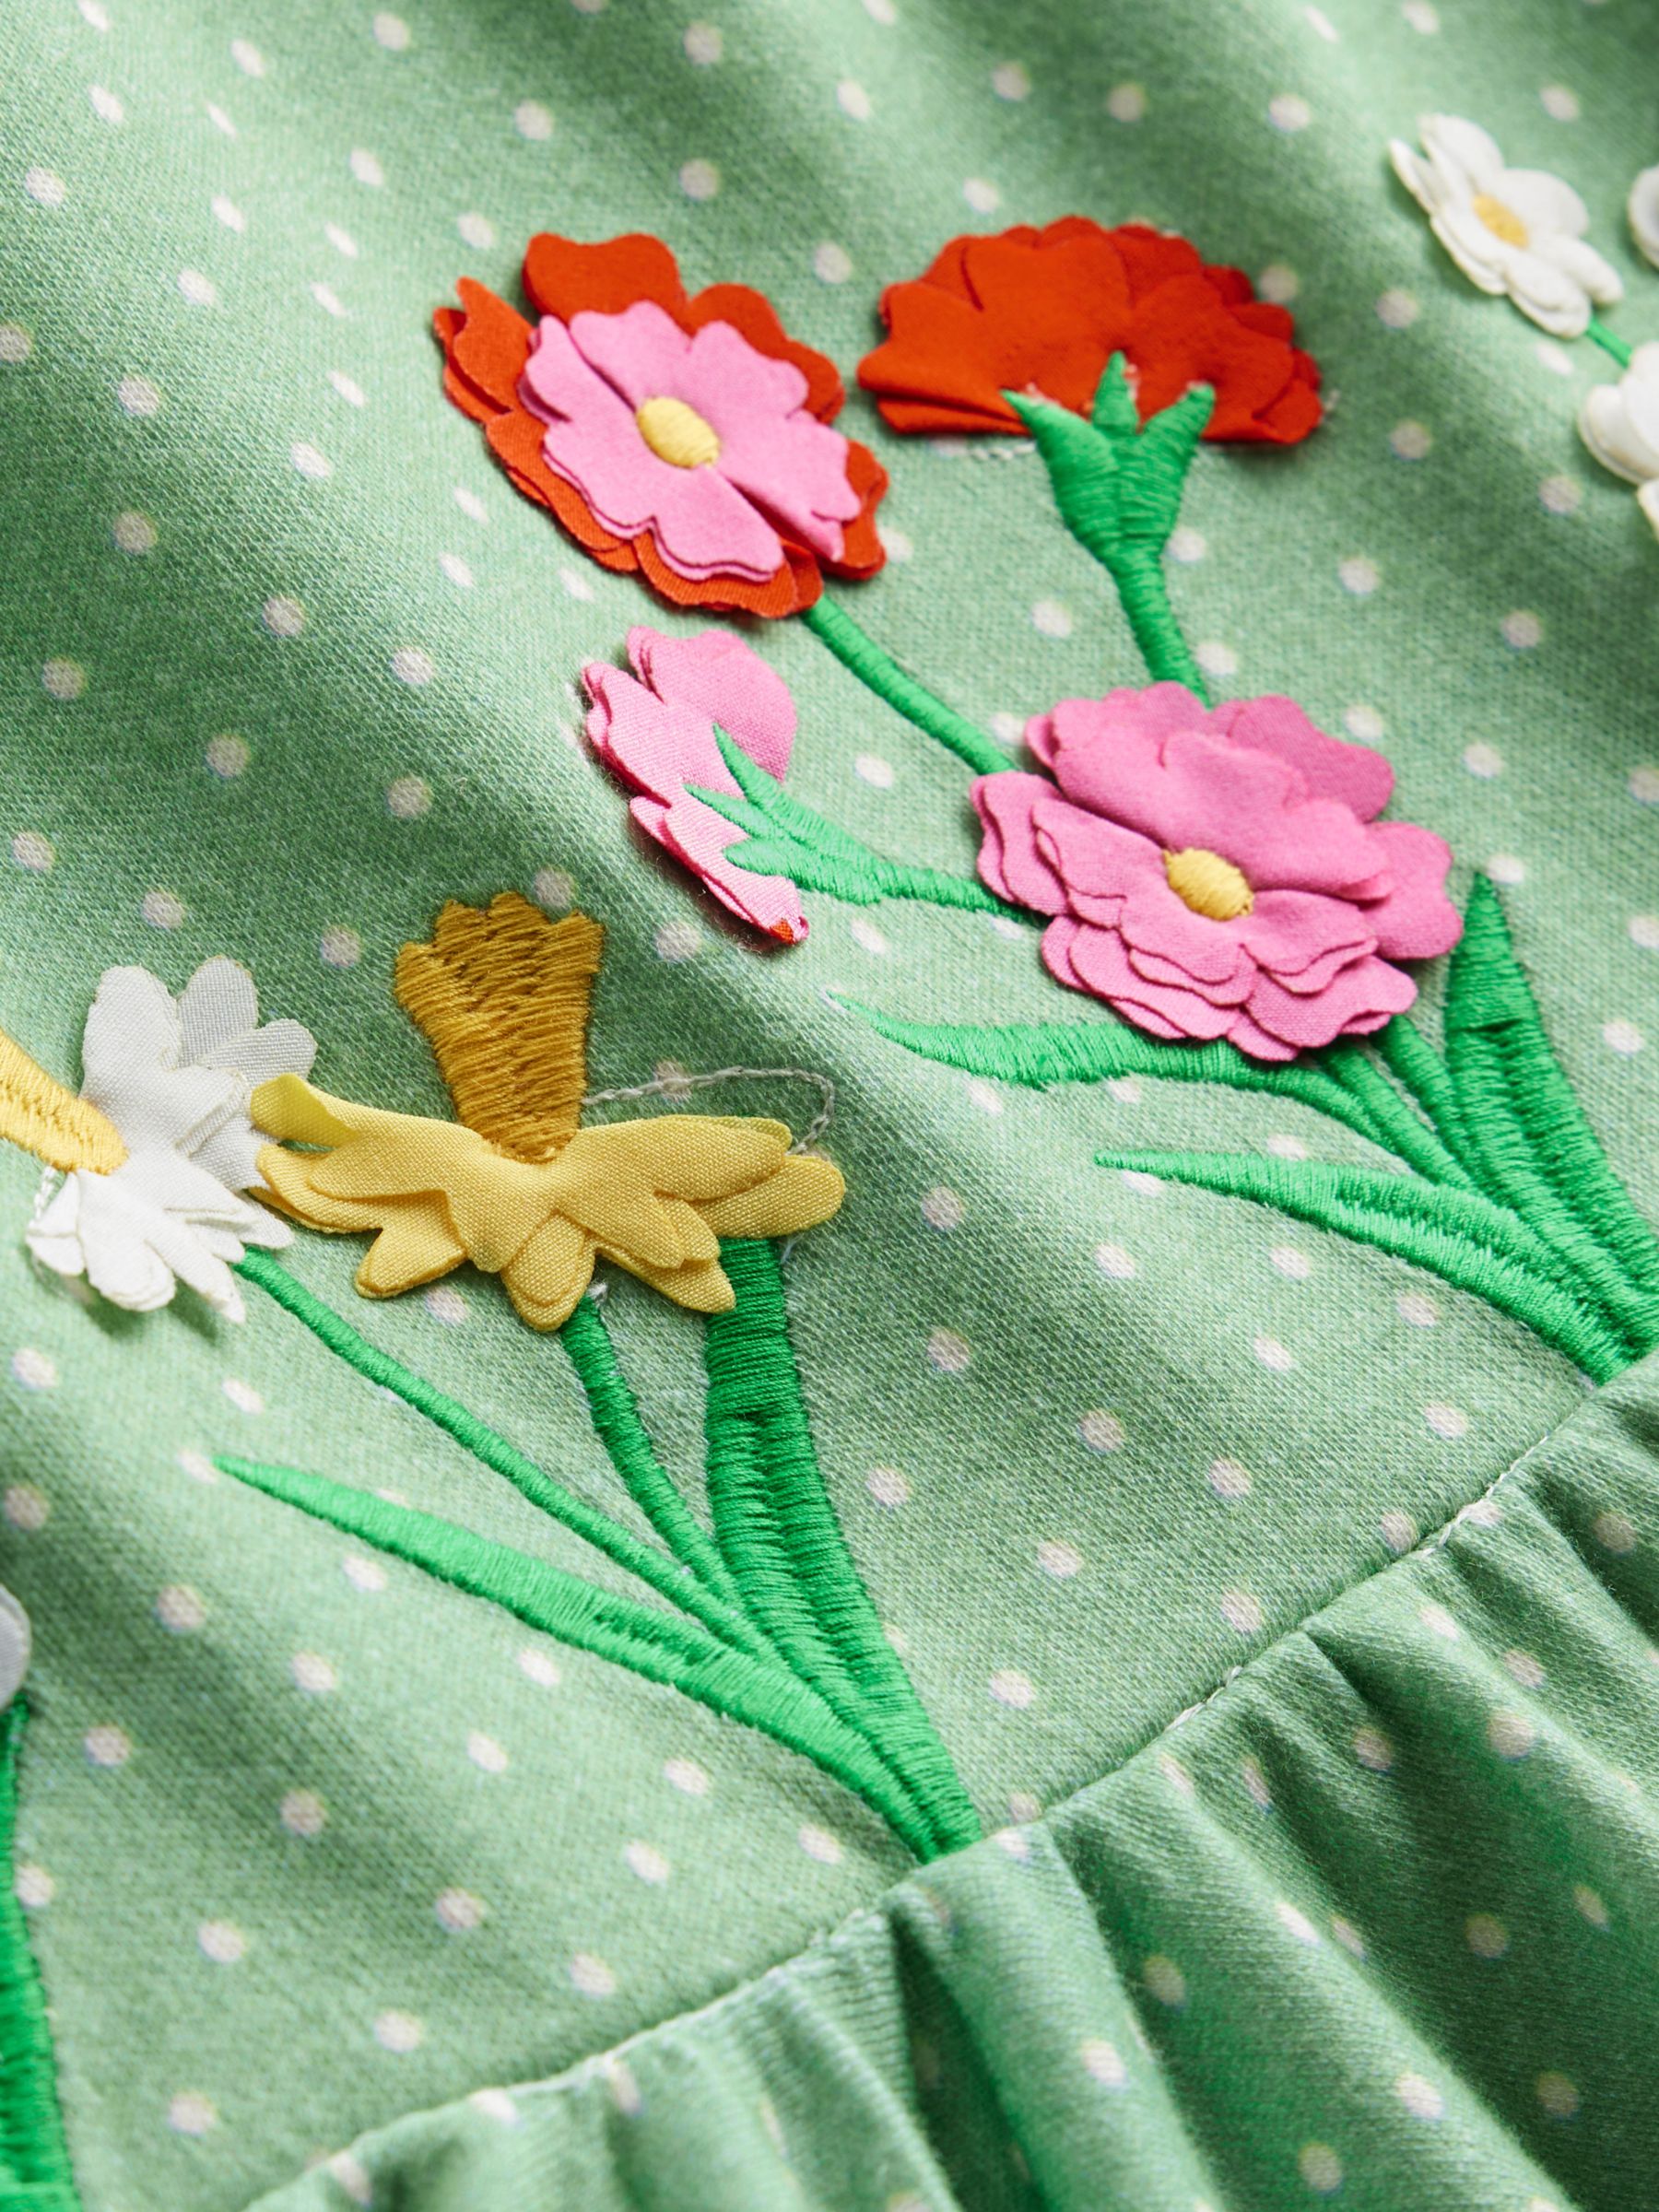 Mini Boden Kids' Flutter Floral Twirly Dress, Pistachio Green, 2-3 years